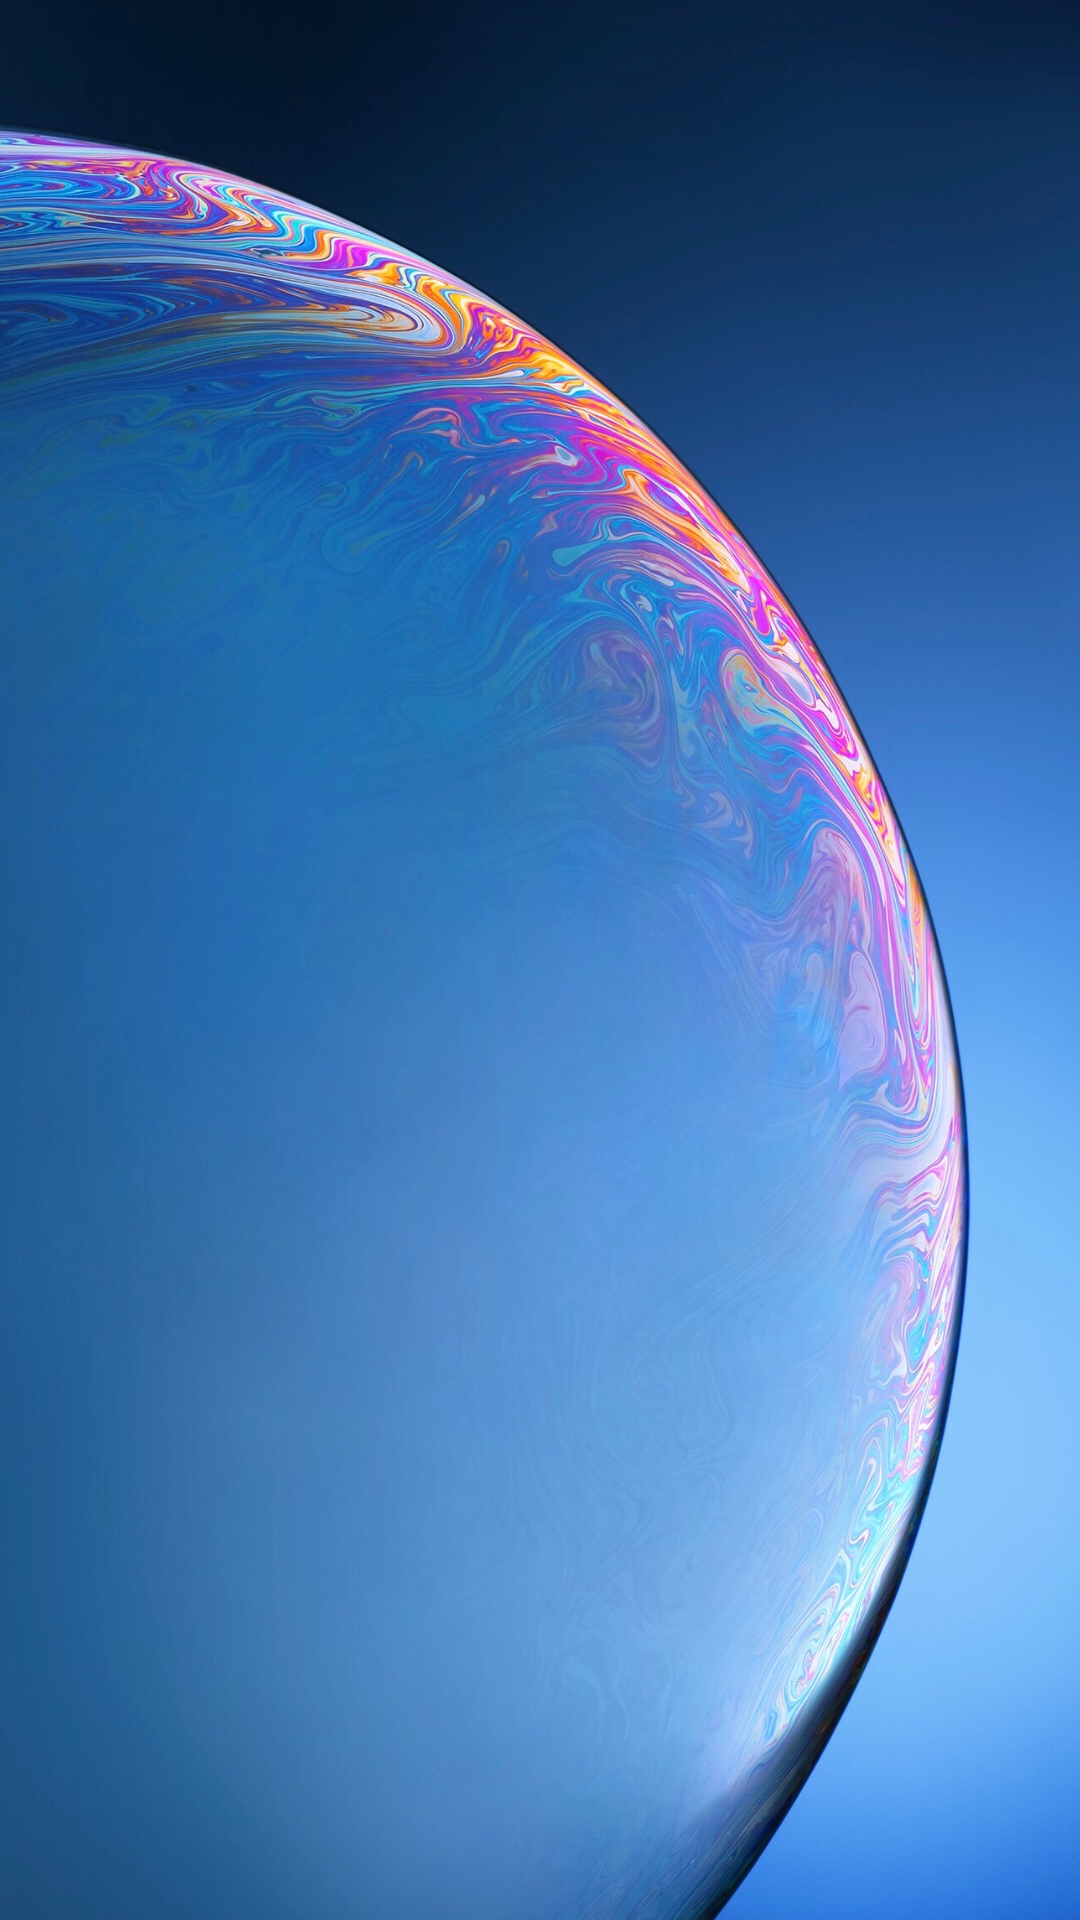 Custom iPhone Xr background in blue